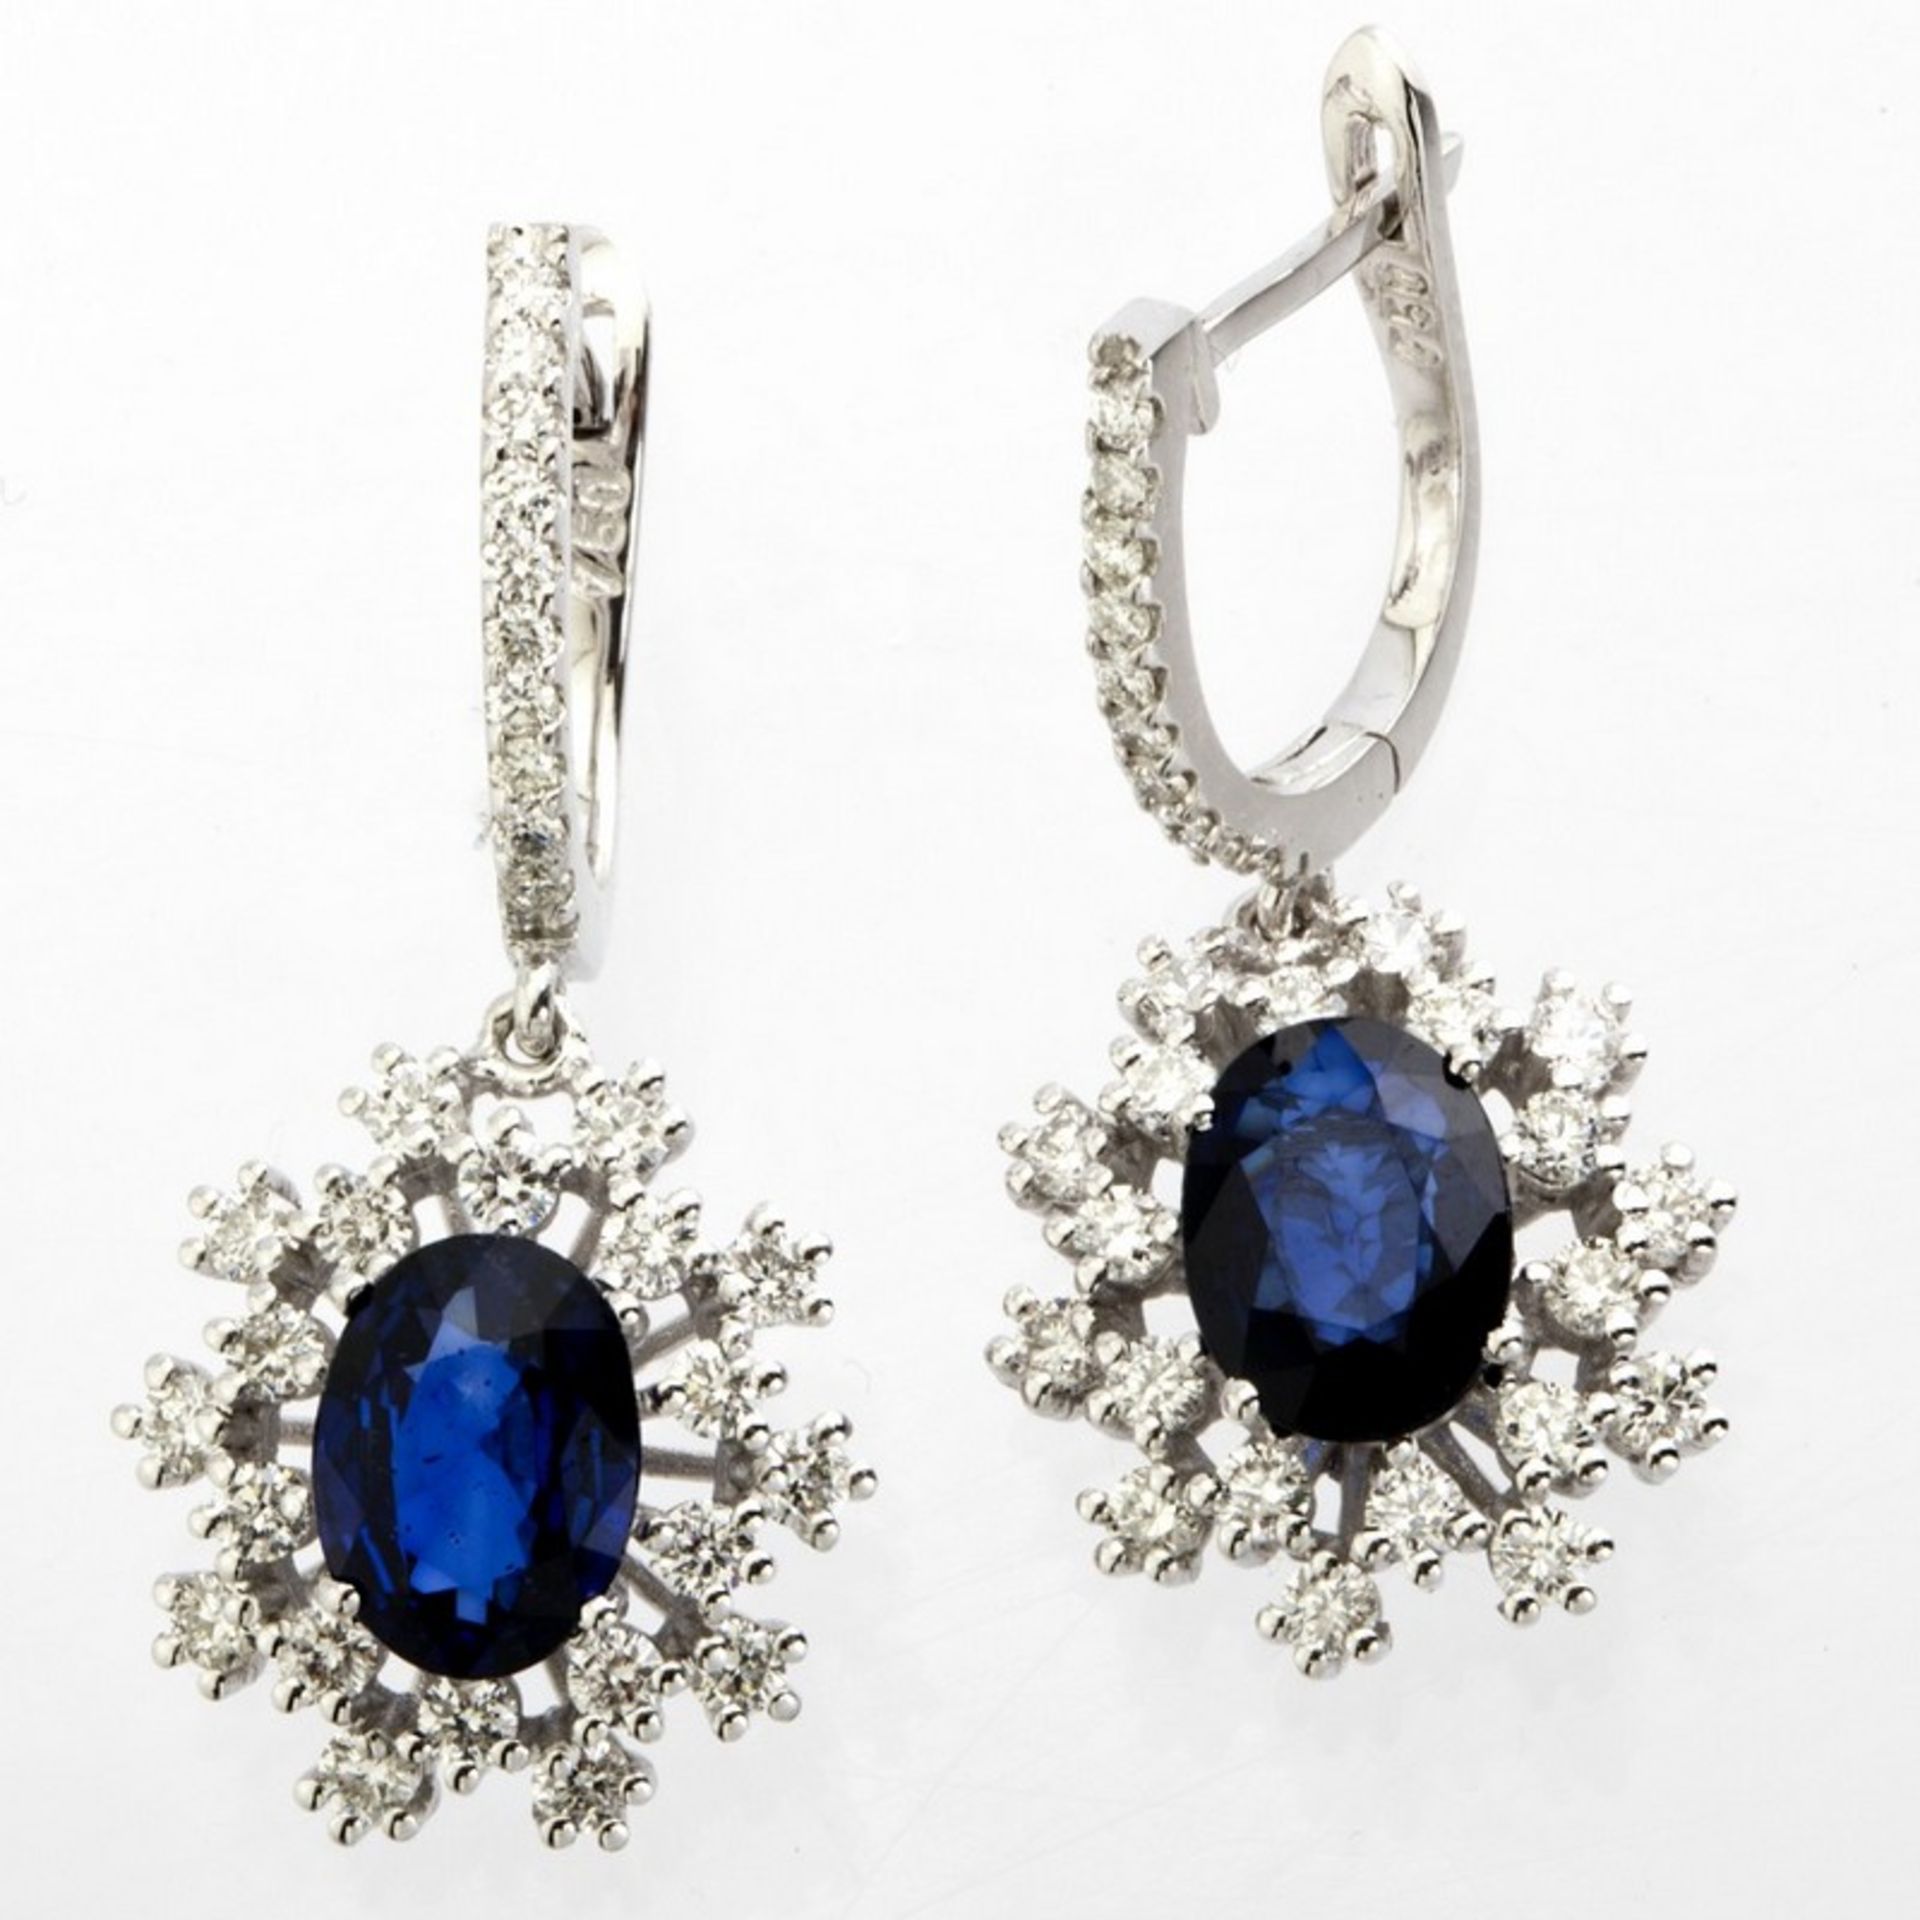 Certificated 18K White Gold Diamond & Sapphire Earring - Image 3 of 5